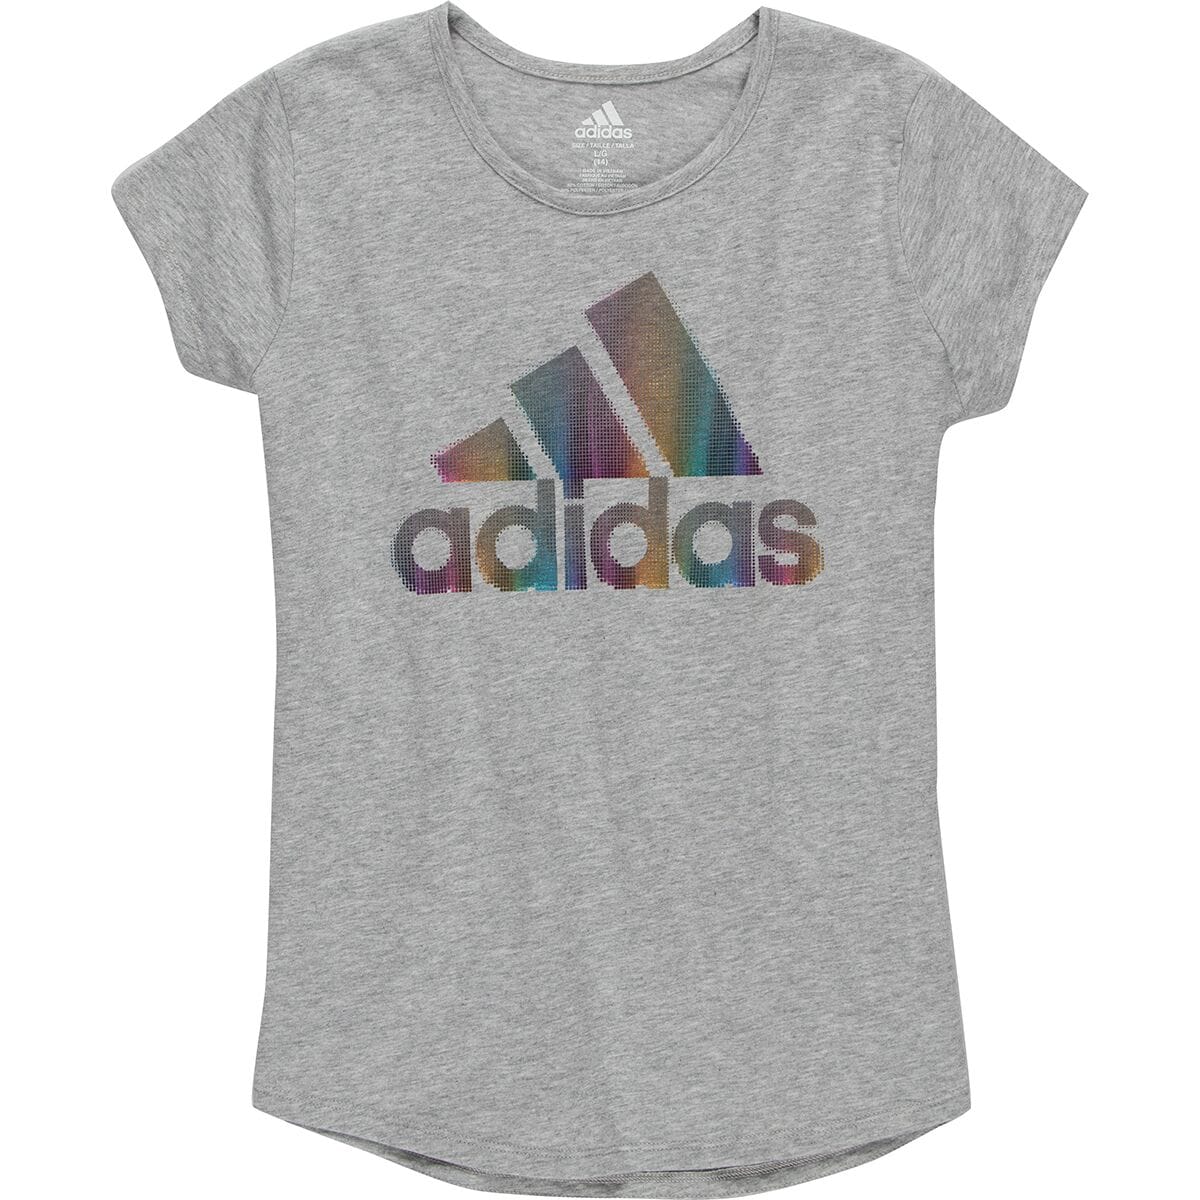 Adidas Replenish Bos Scoop Neck T-Shirt - Girls'